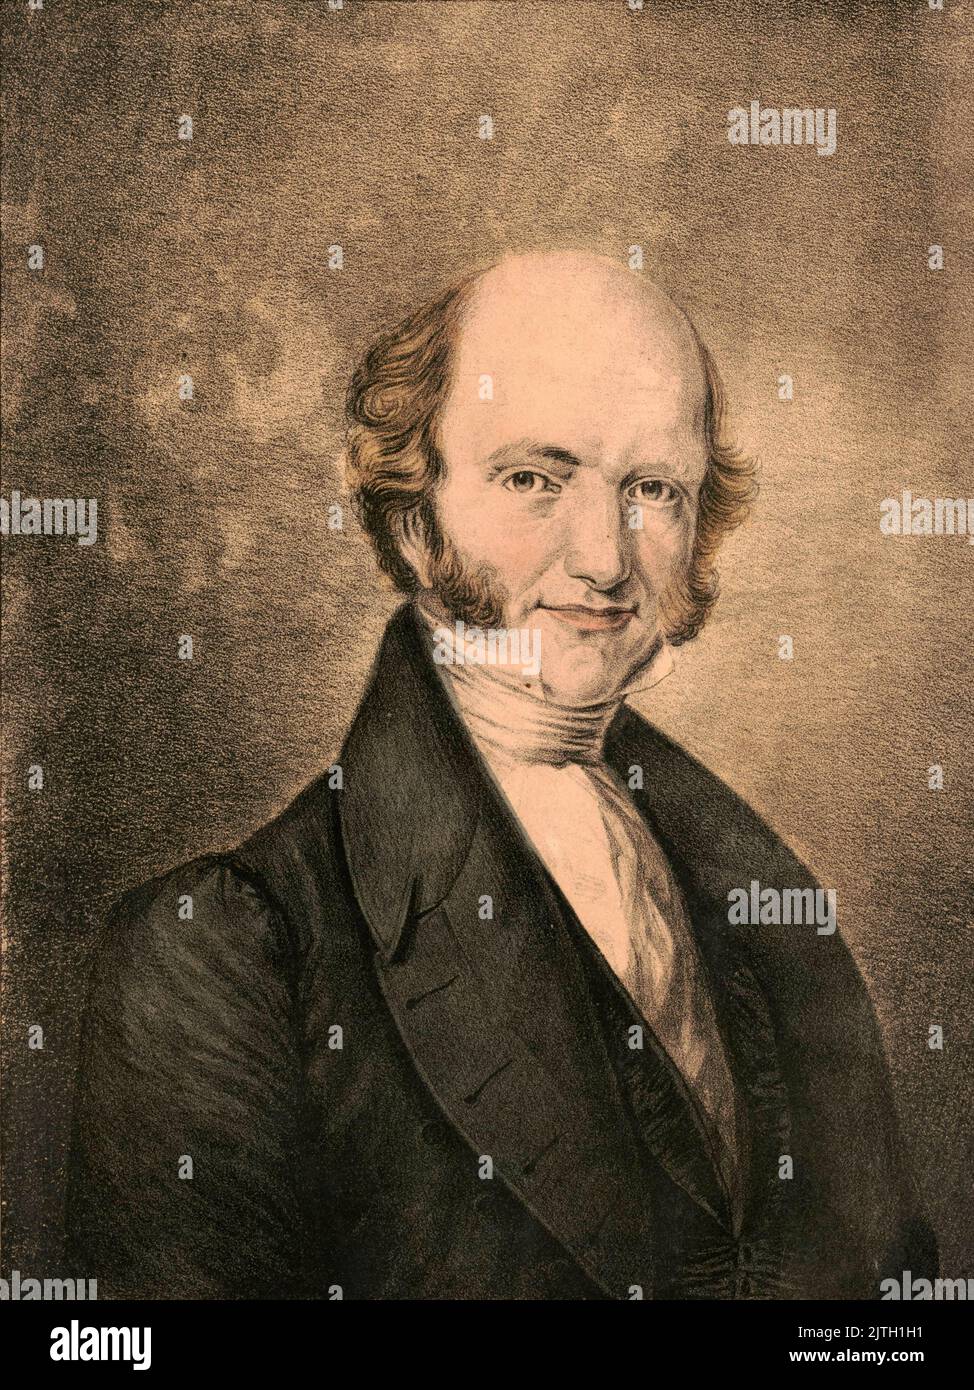 A portrait of President Martin van Buren. Martin van Buren was the eighth president of the USA. Stock Photo